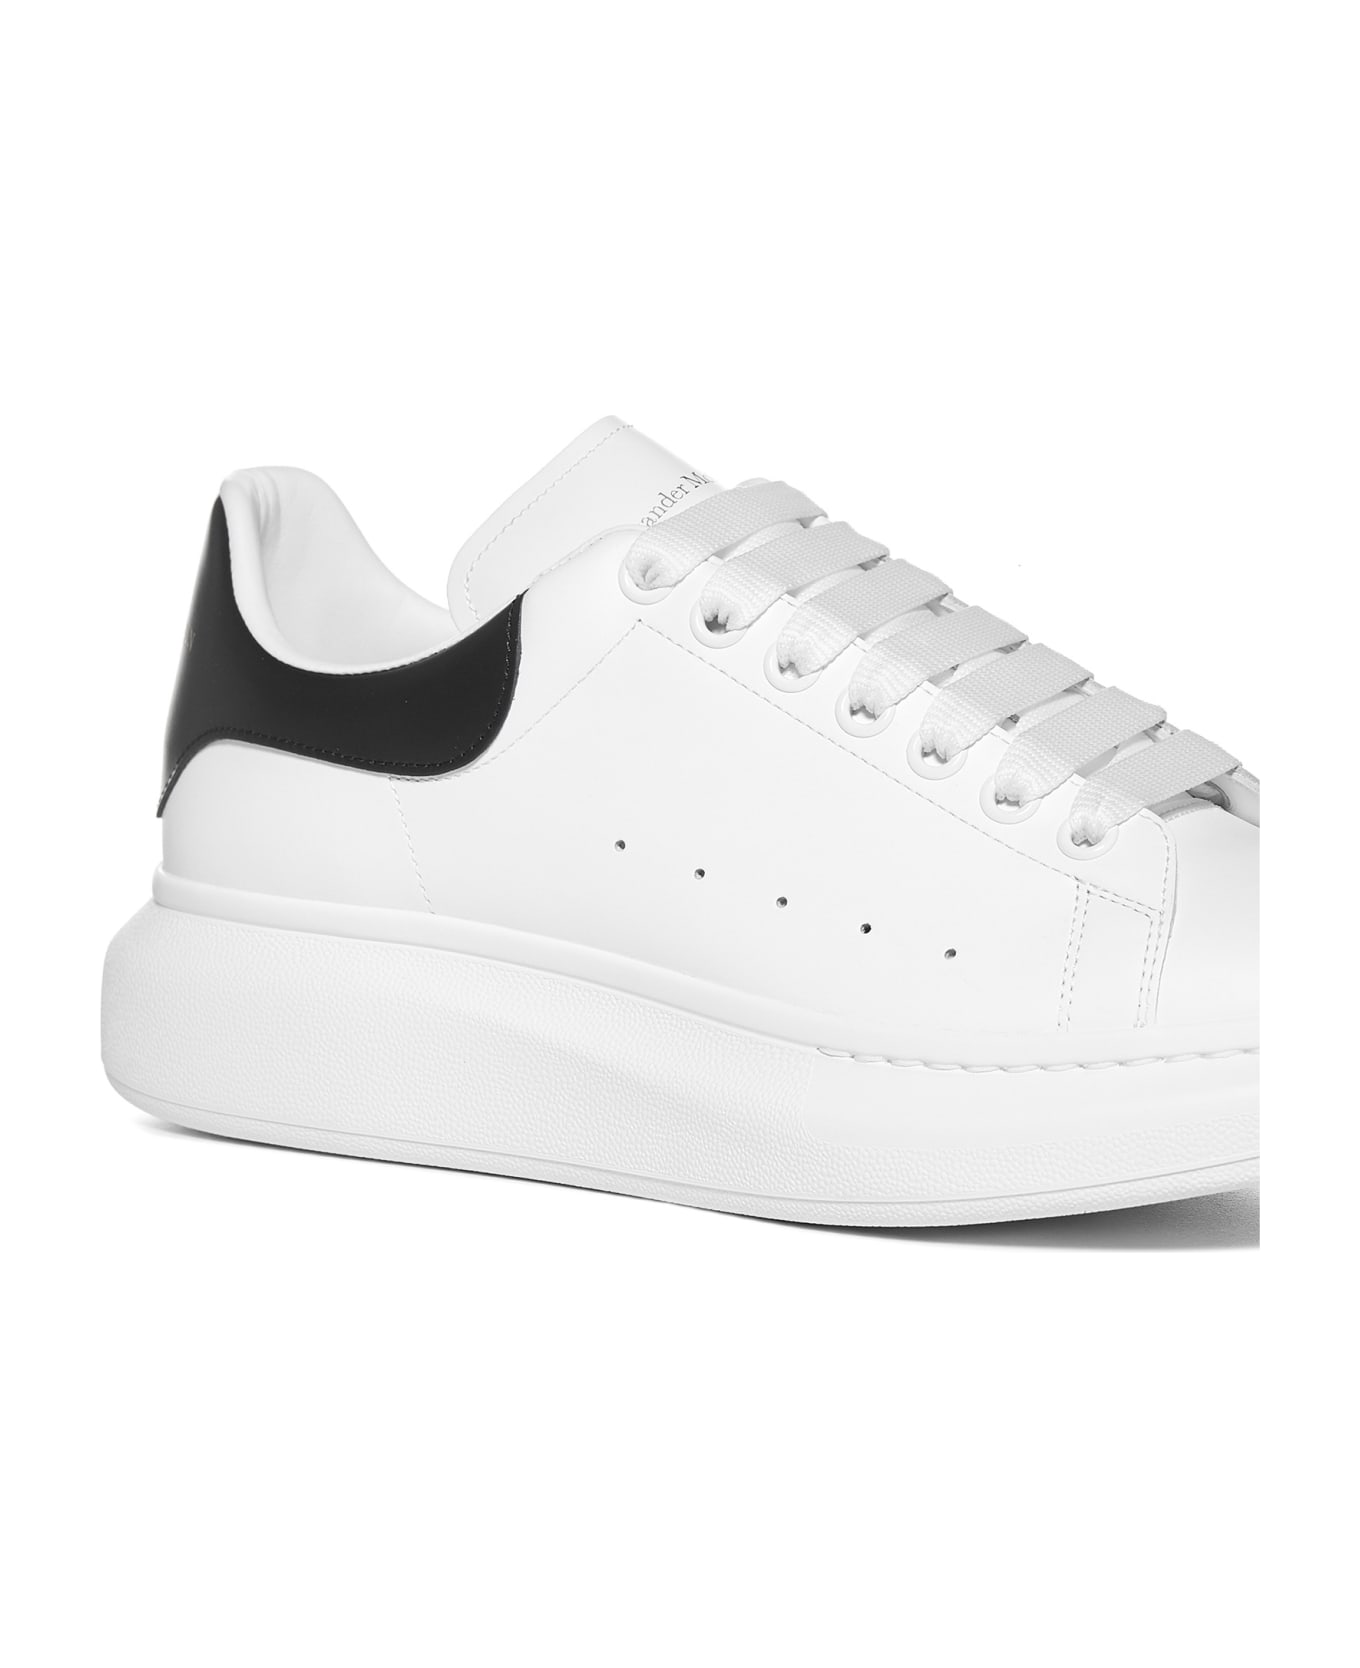 Alexander McQueen Oversize Leather Sneakers - White/black スニーカー